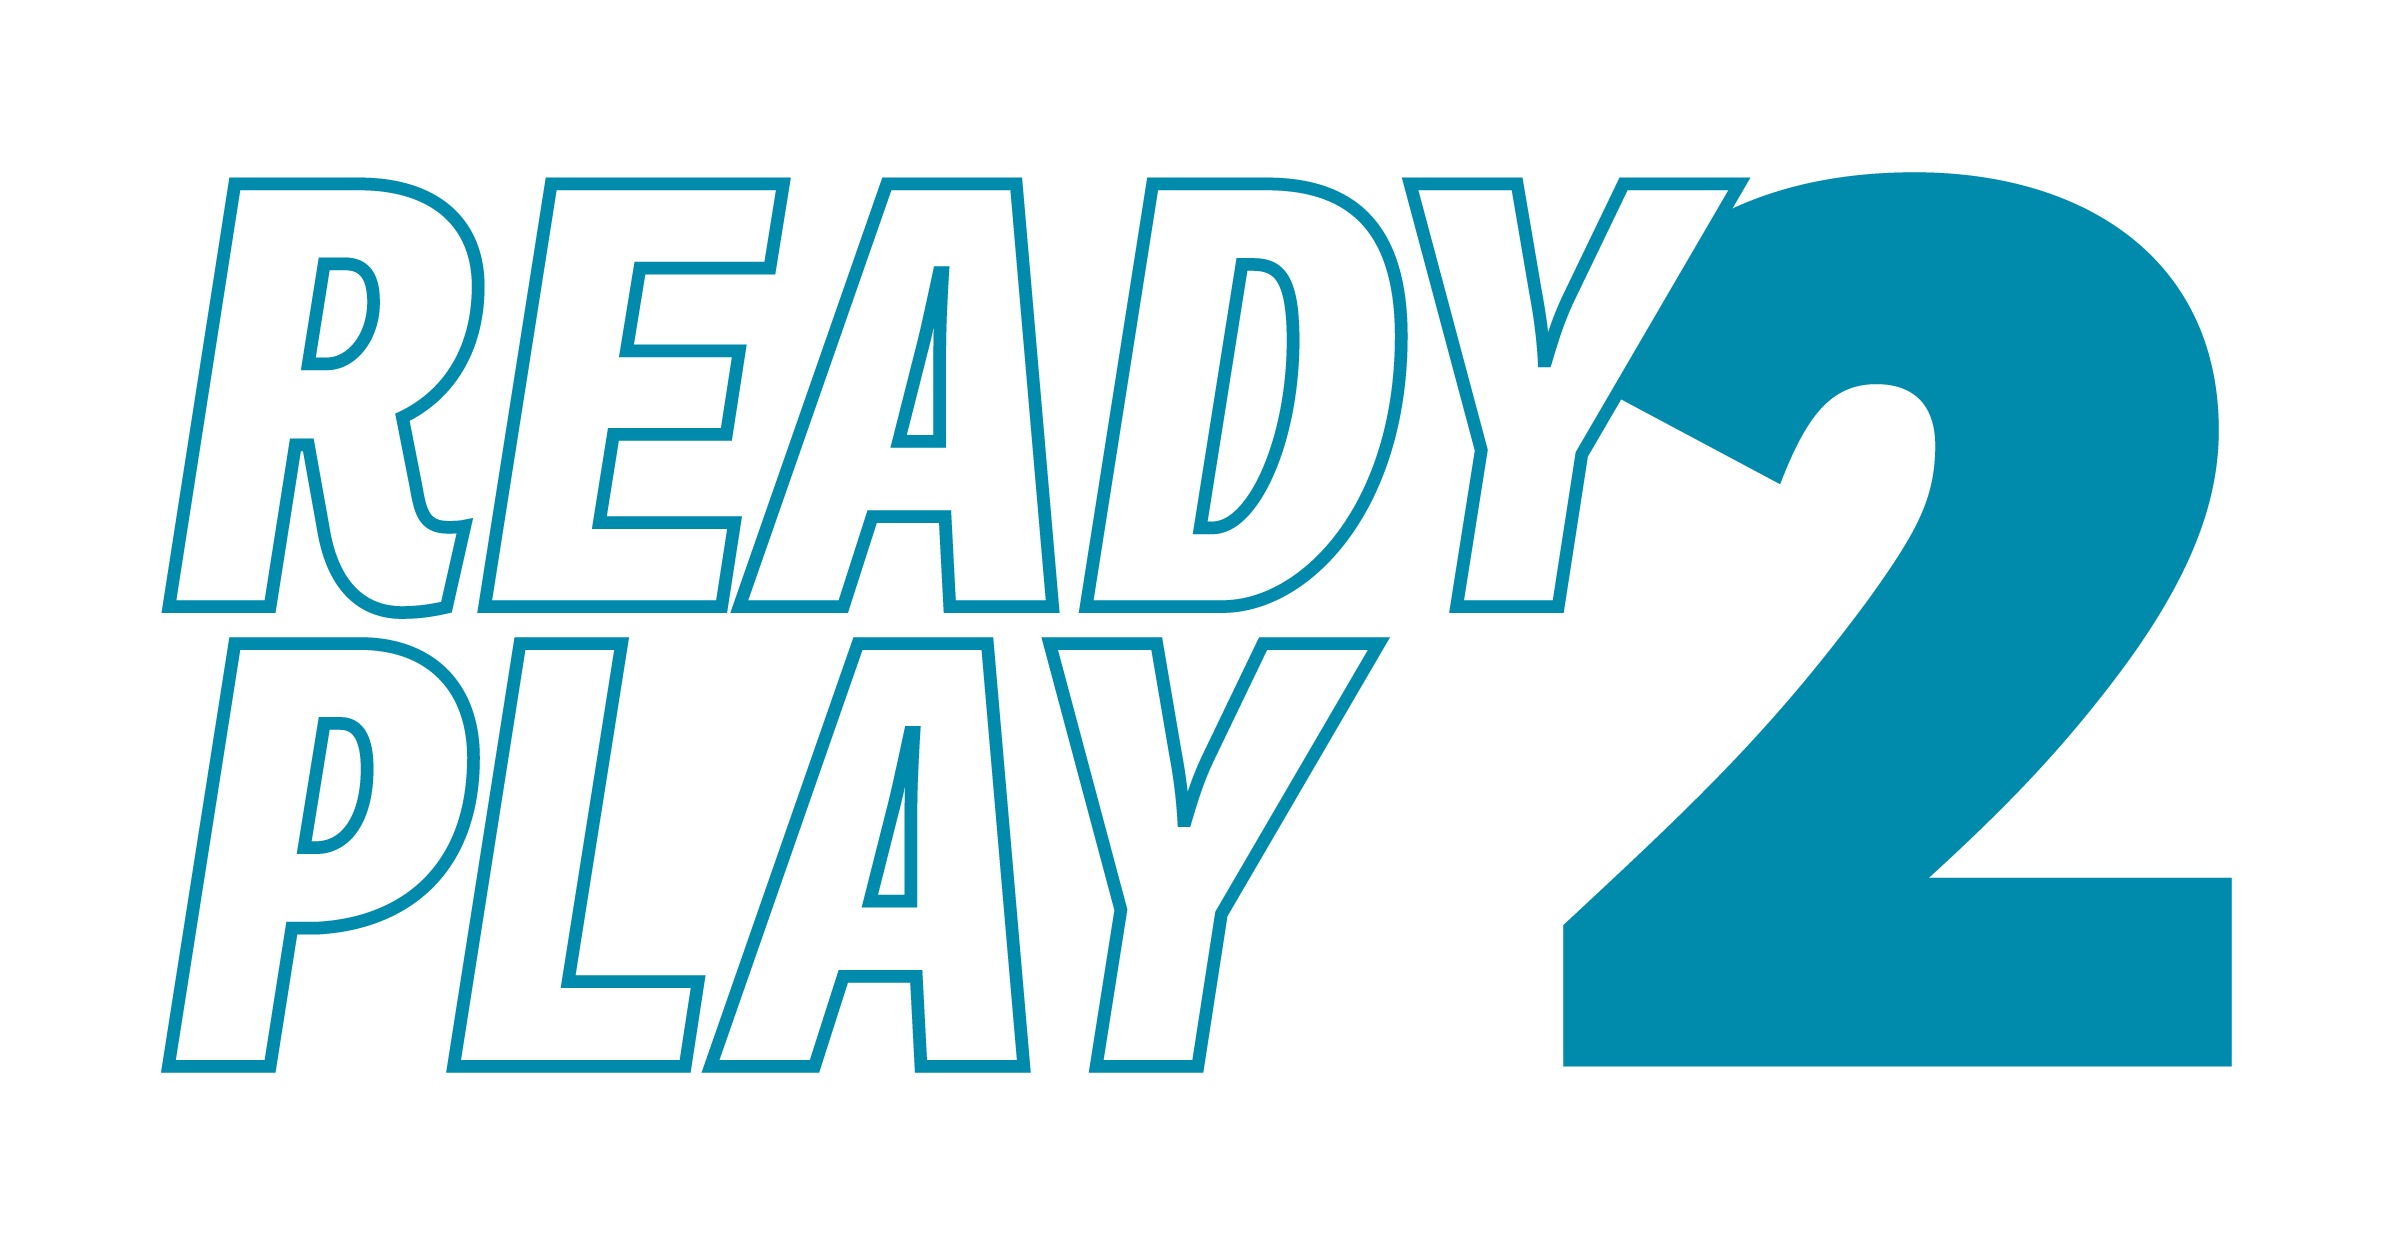 Ready2Play_Blue